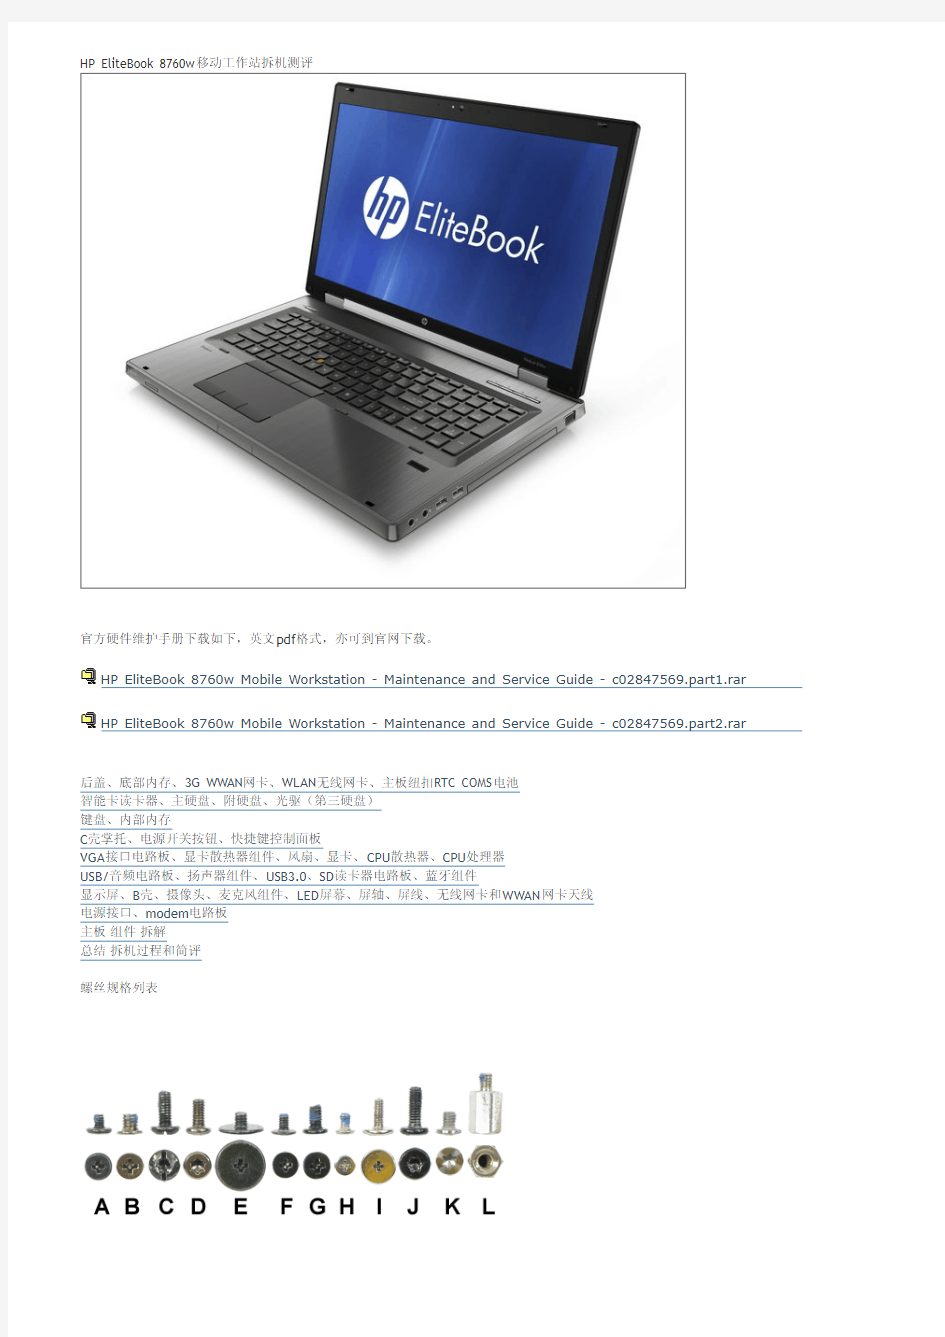 HP EliteBook 8760w移动工作站拆机测评 - 笔记本电脑